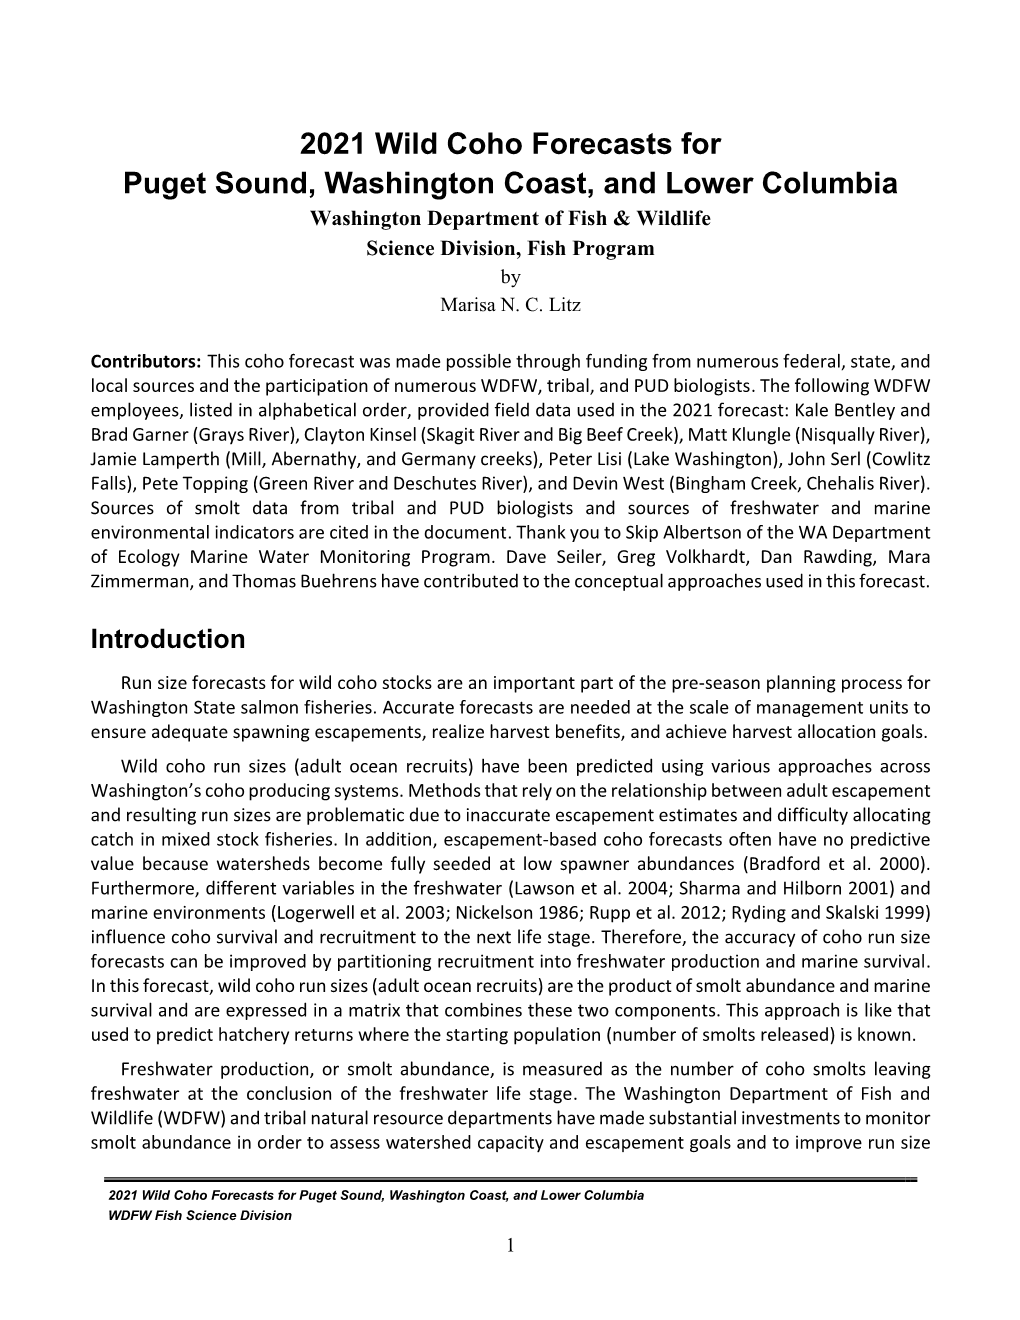 2021 Wild Coho Forecasts for Puget Sound, Washington Coast, and Lower Columbia Washington Department of Fish & Wildlife Science Division, Fish Program by Marisa N